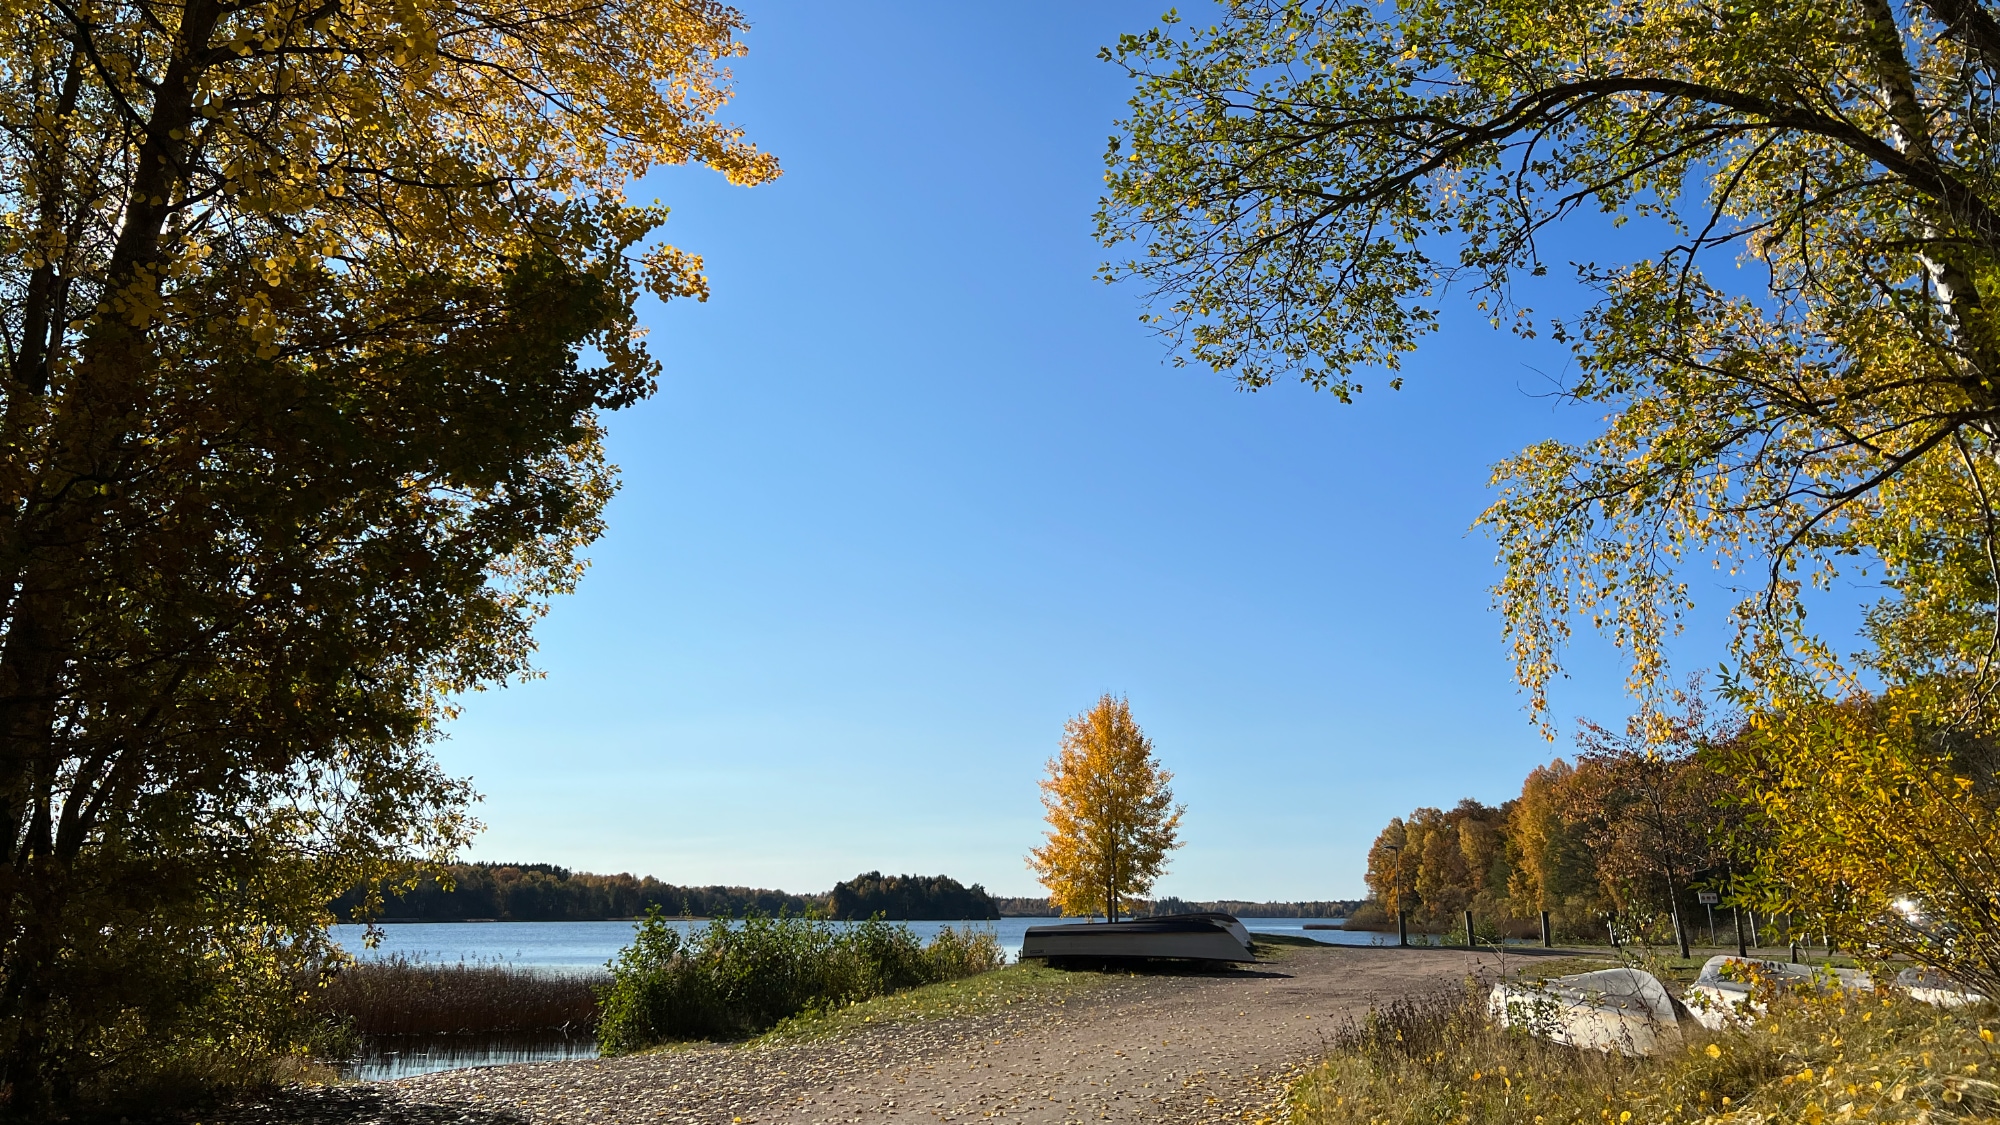 A photo taken at the lake Södra Bergundasjön in Växjö.